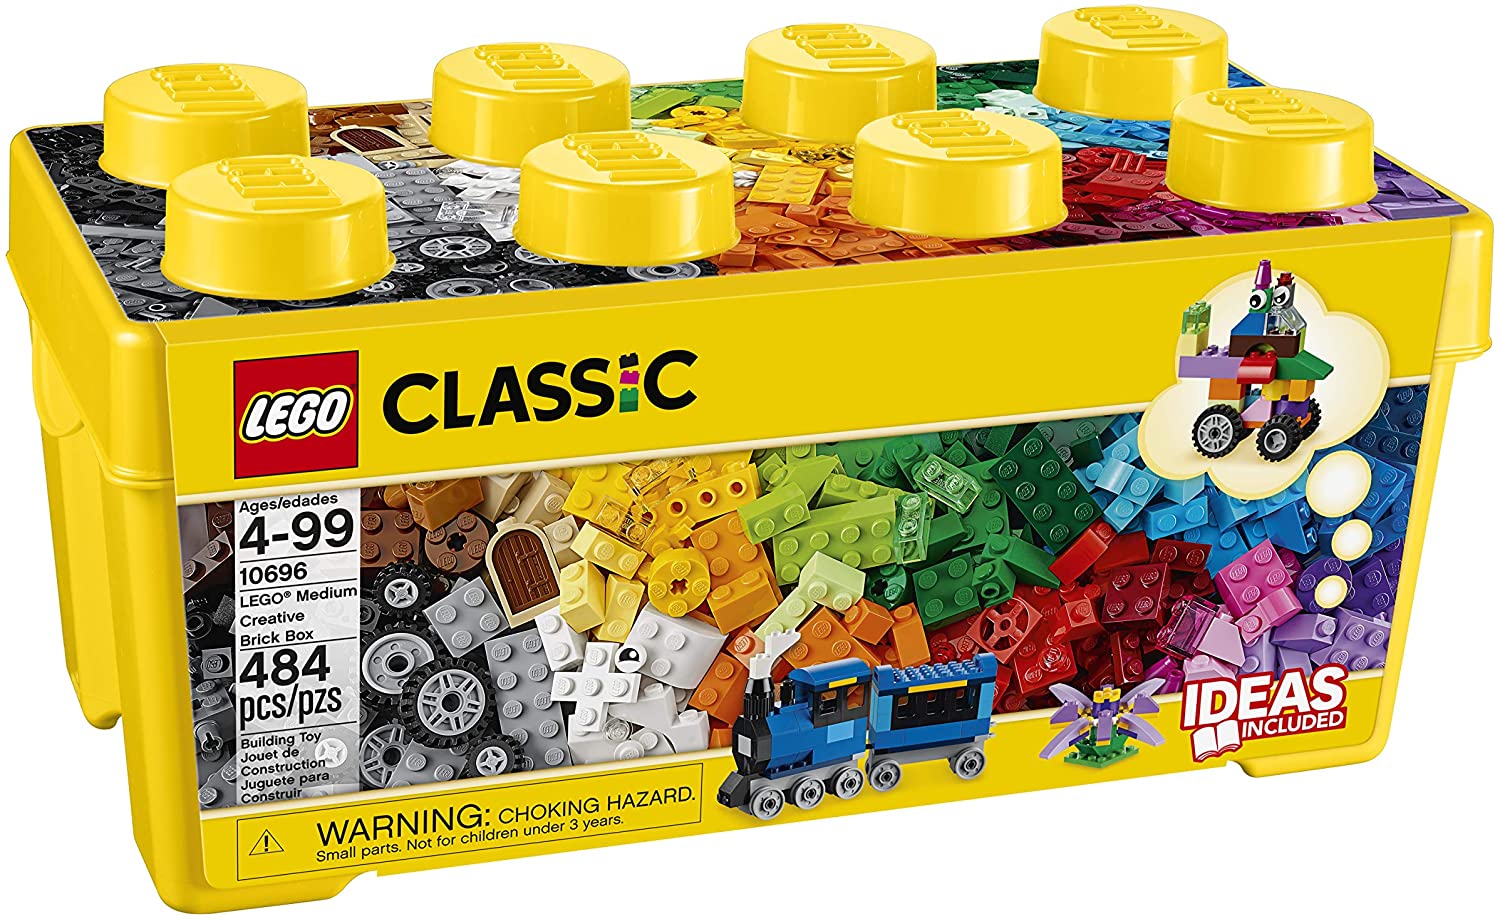 Best LEGO Brick Box Kit